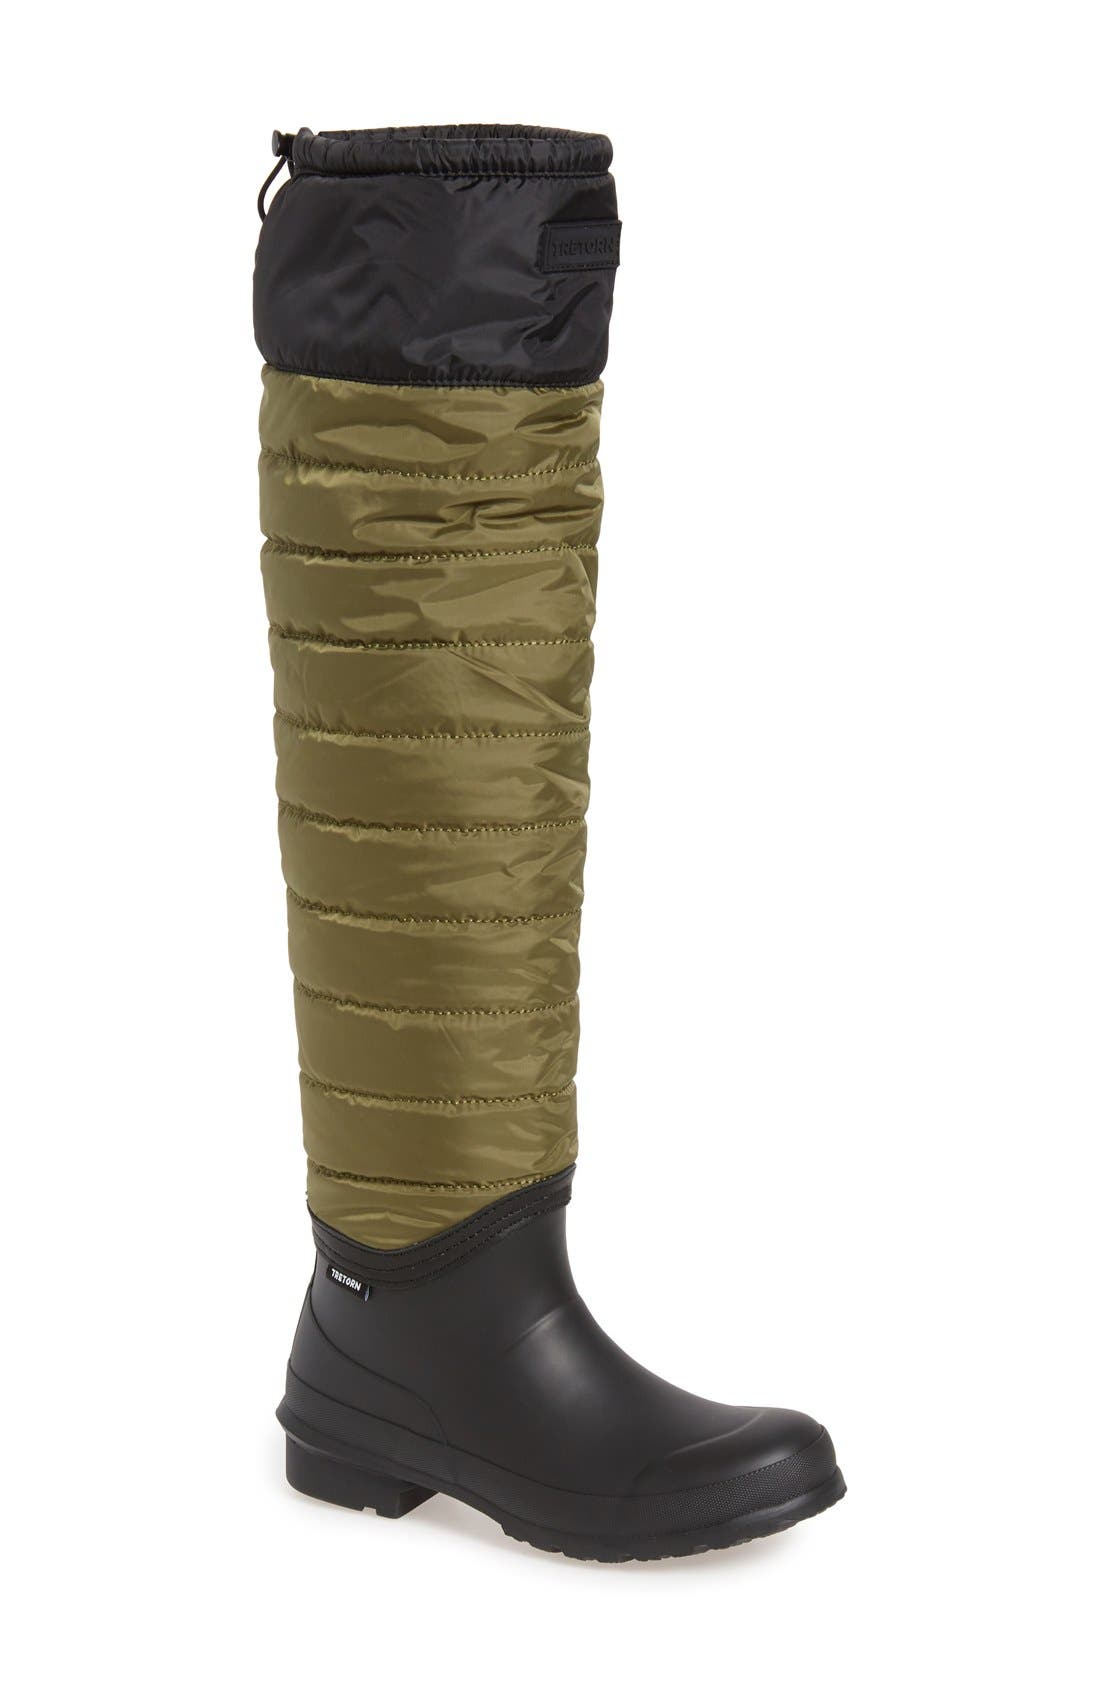 tretorn women's rain boots